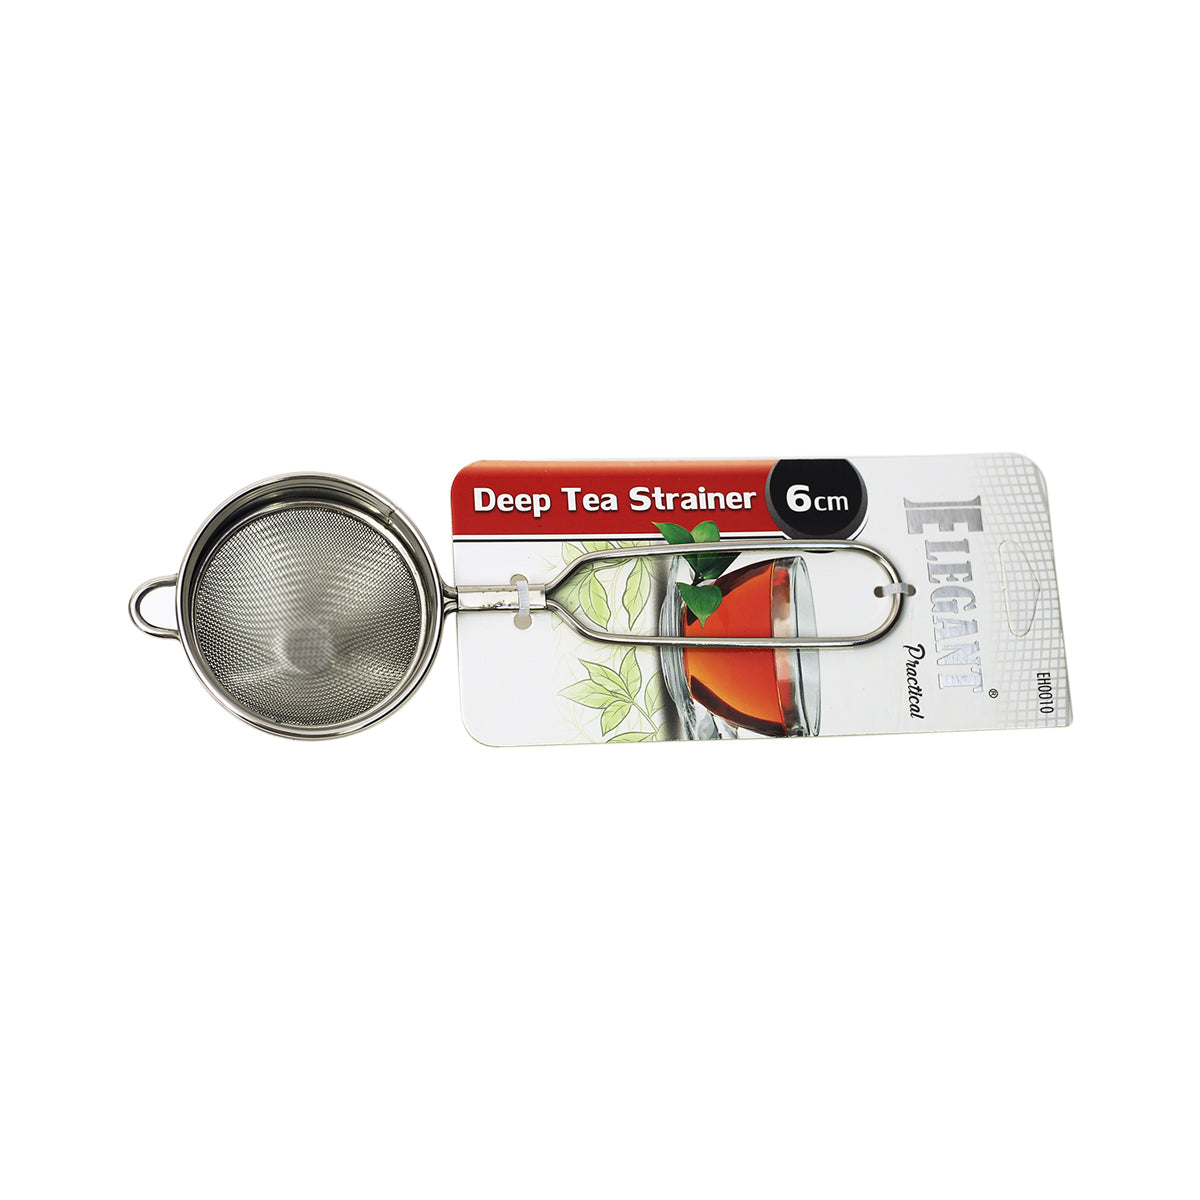 Deep Tea Strainer 6cm EH0010